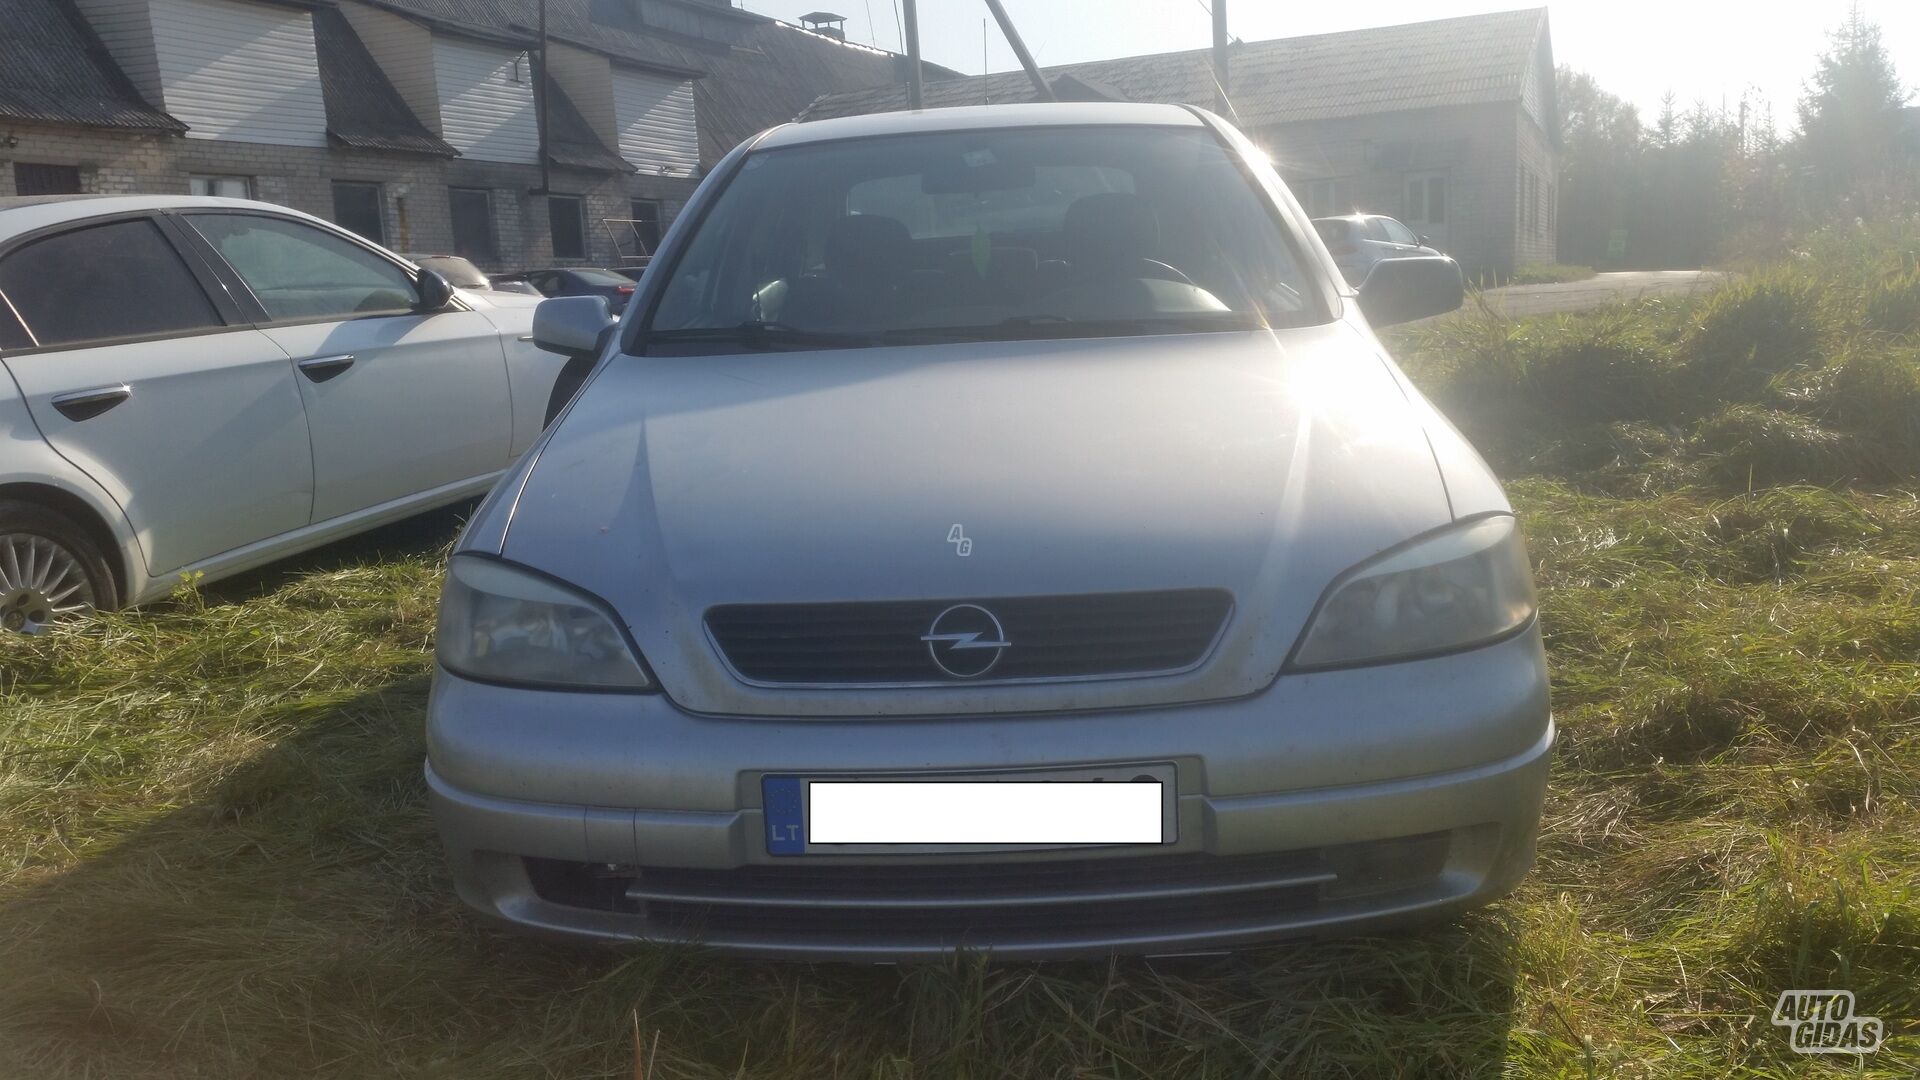 Opel Astra I 1999 m dalys